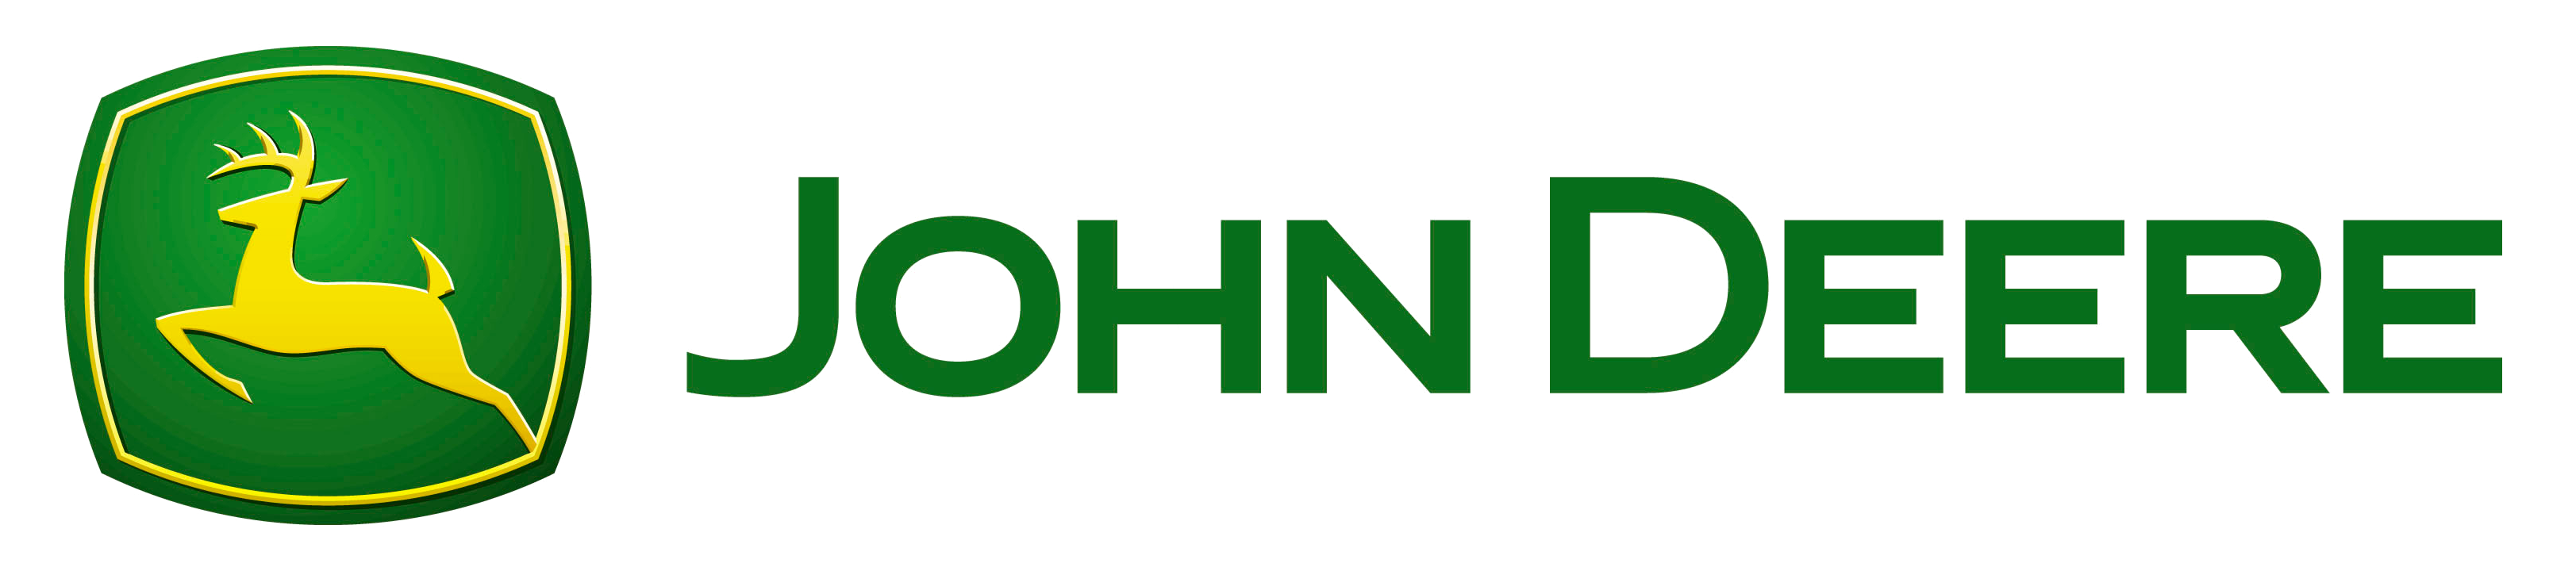 John Deere Logo png download - 1630*1476 - Free Transparent John